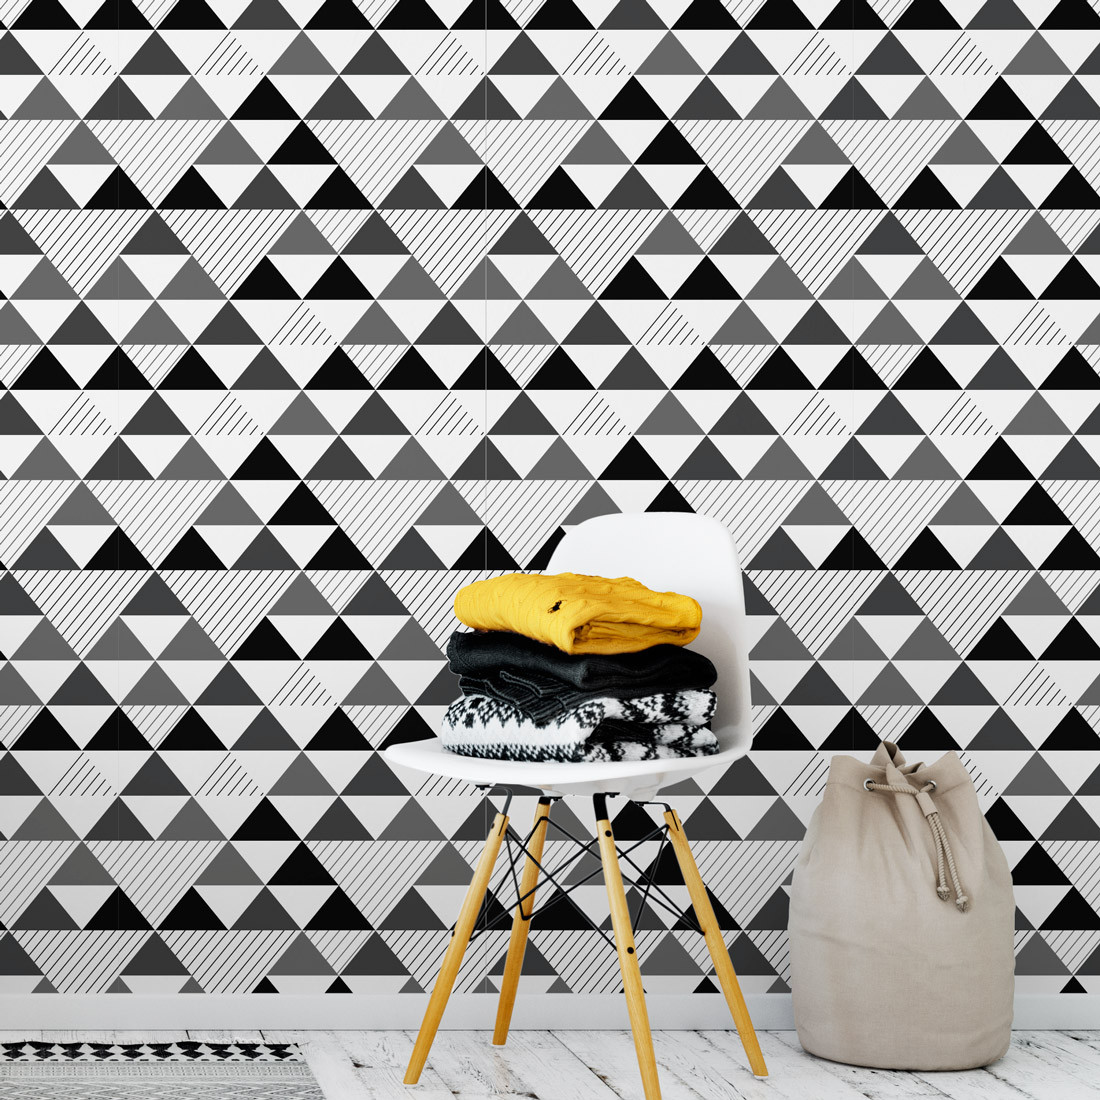 Papel de Parede Triângulos Abstratos (Preto e Branco)